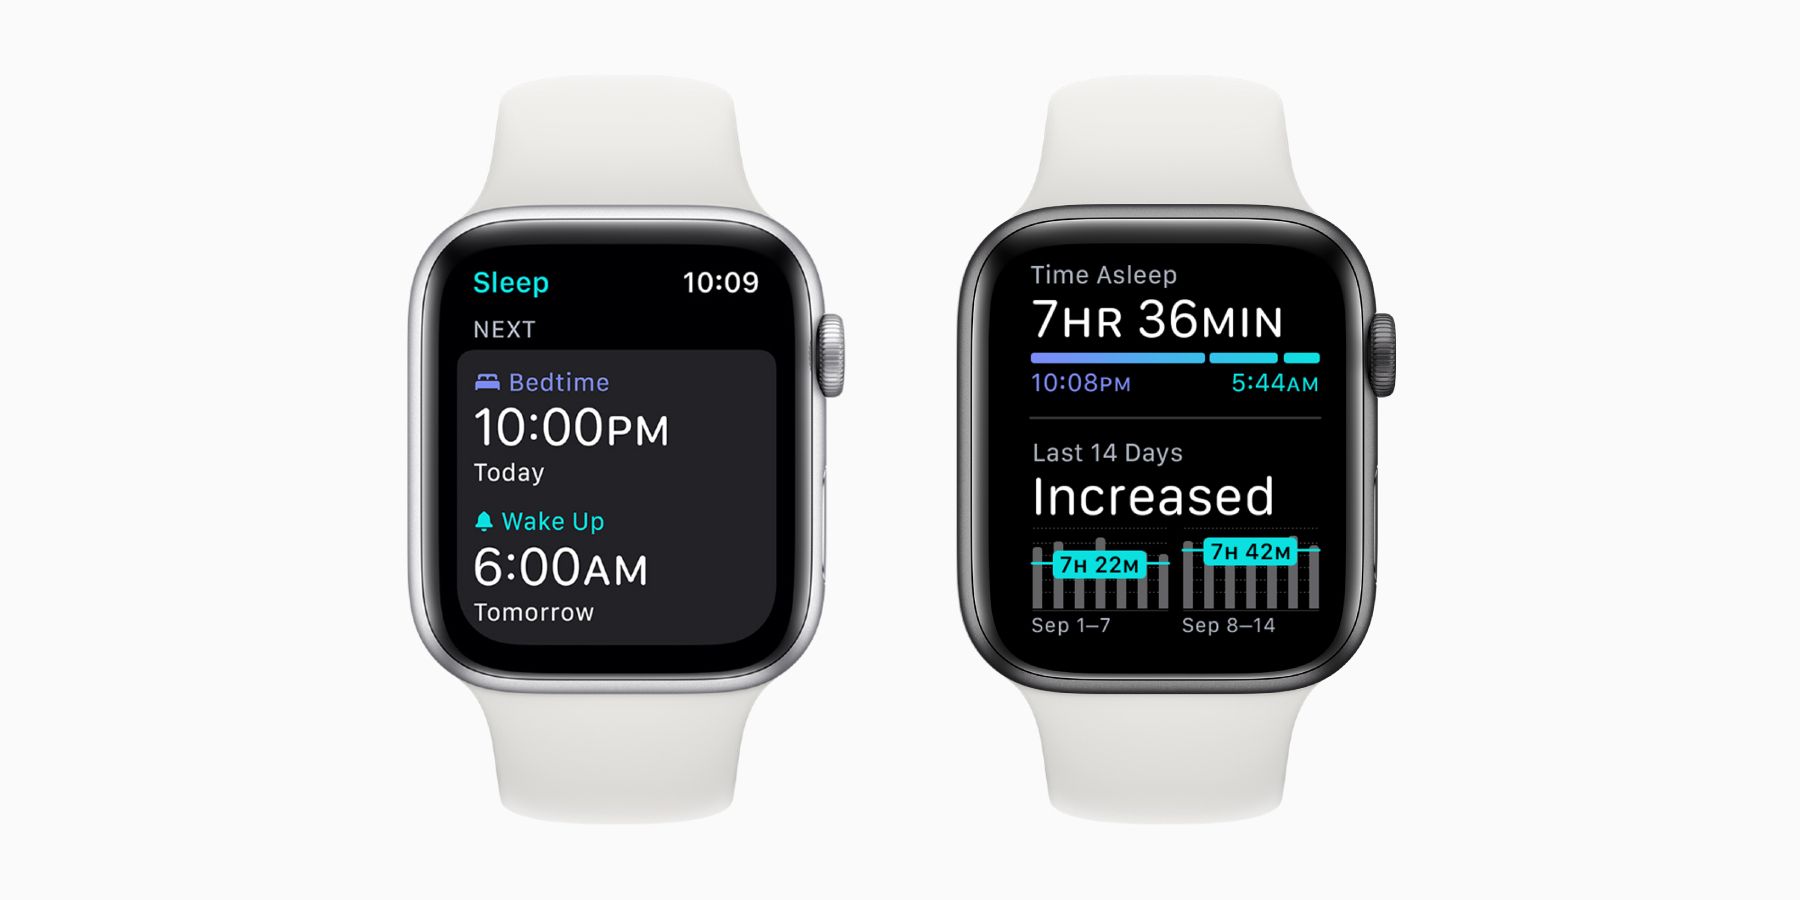 Apple Watch sleep tracking screenshots